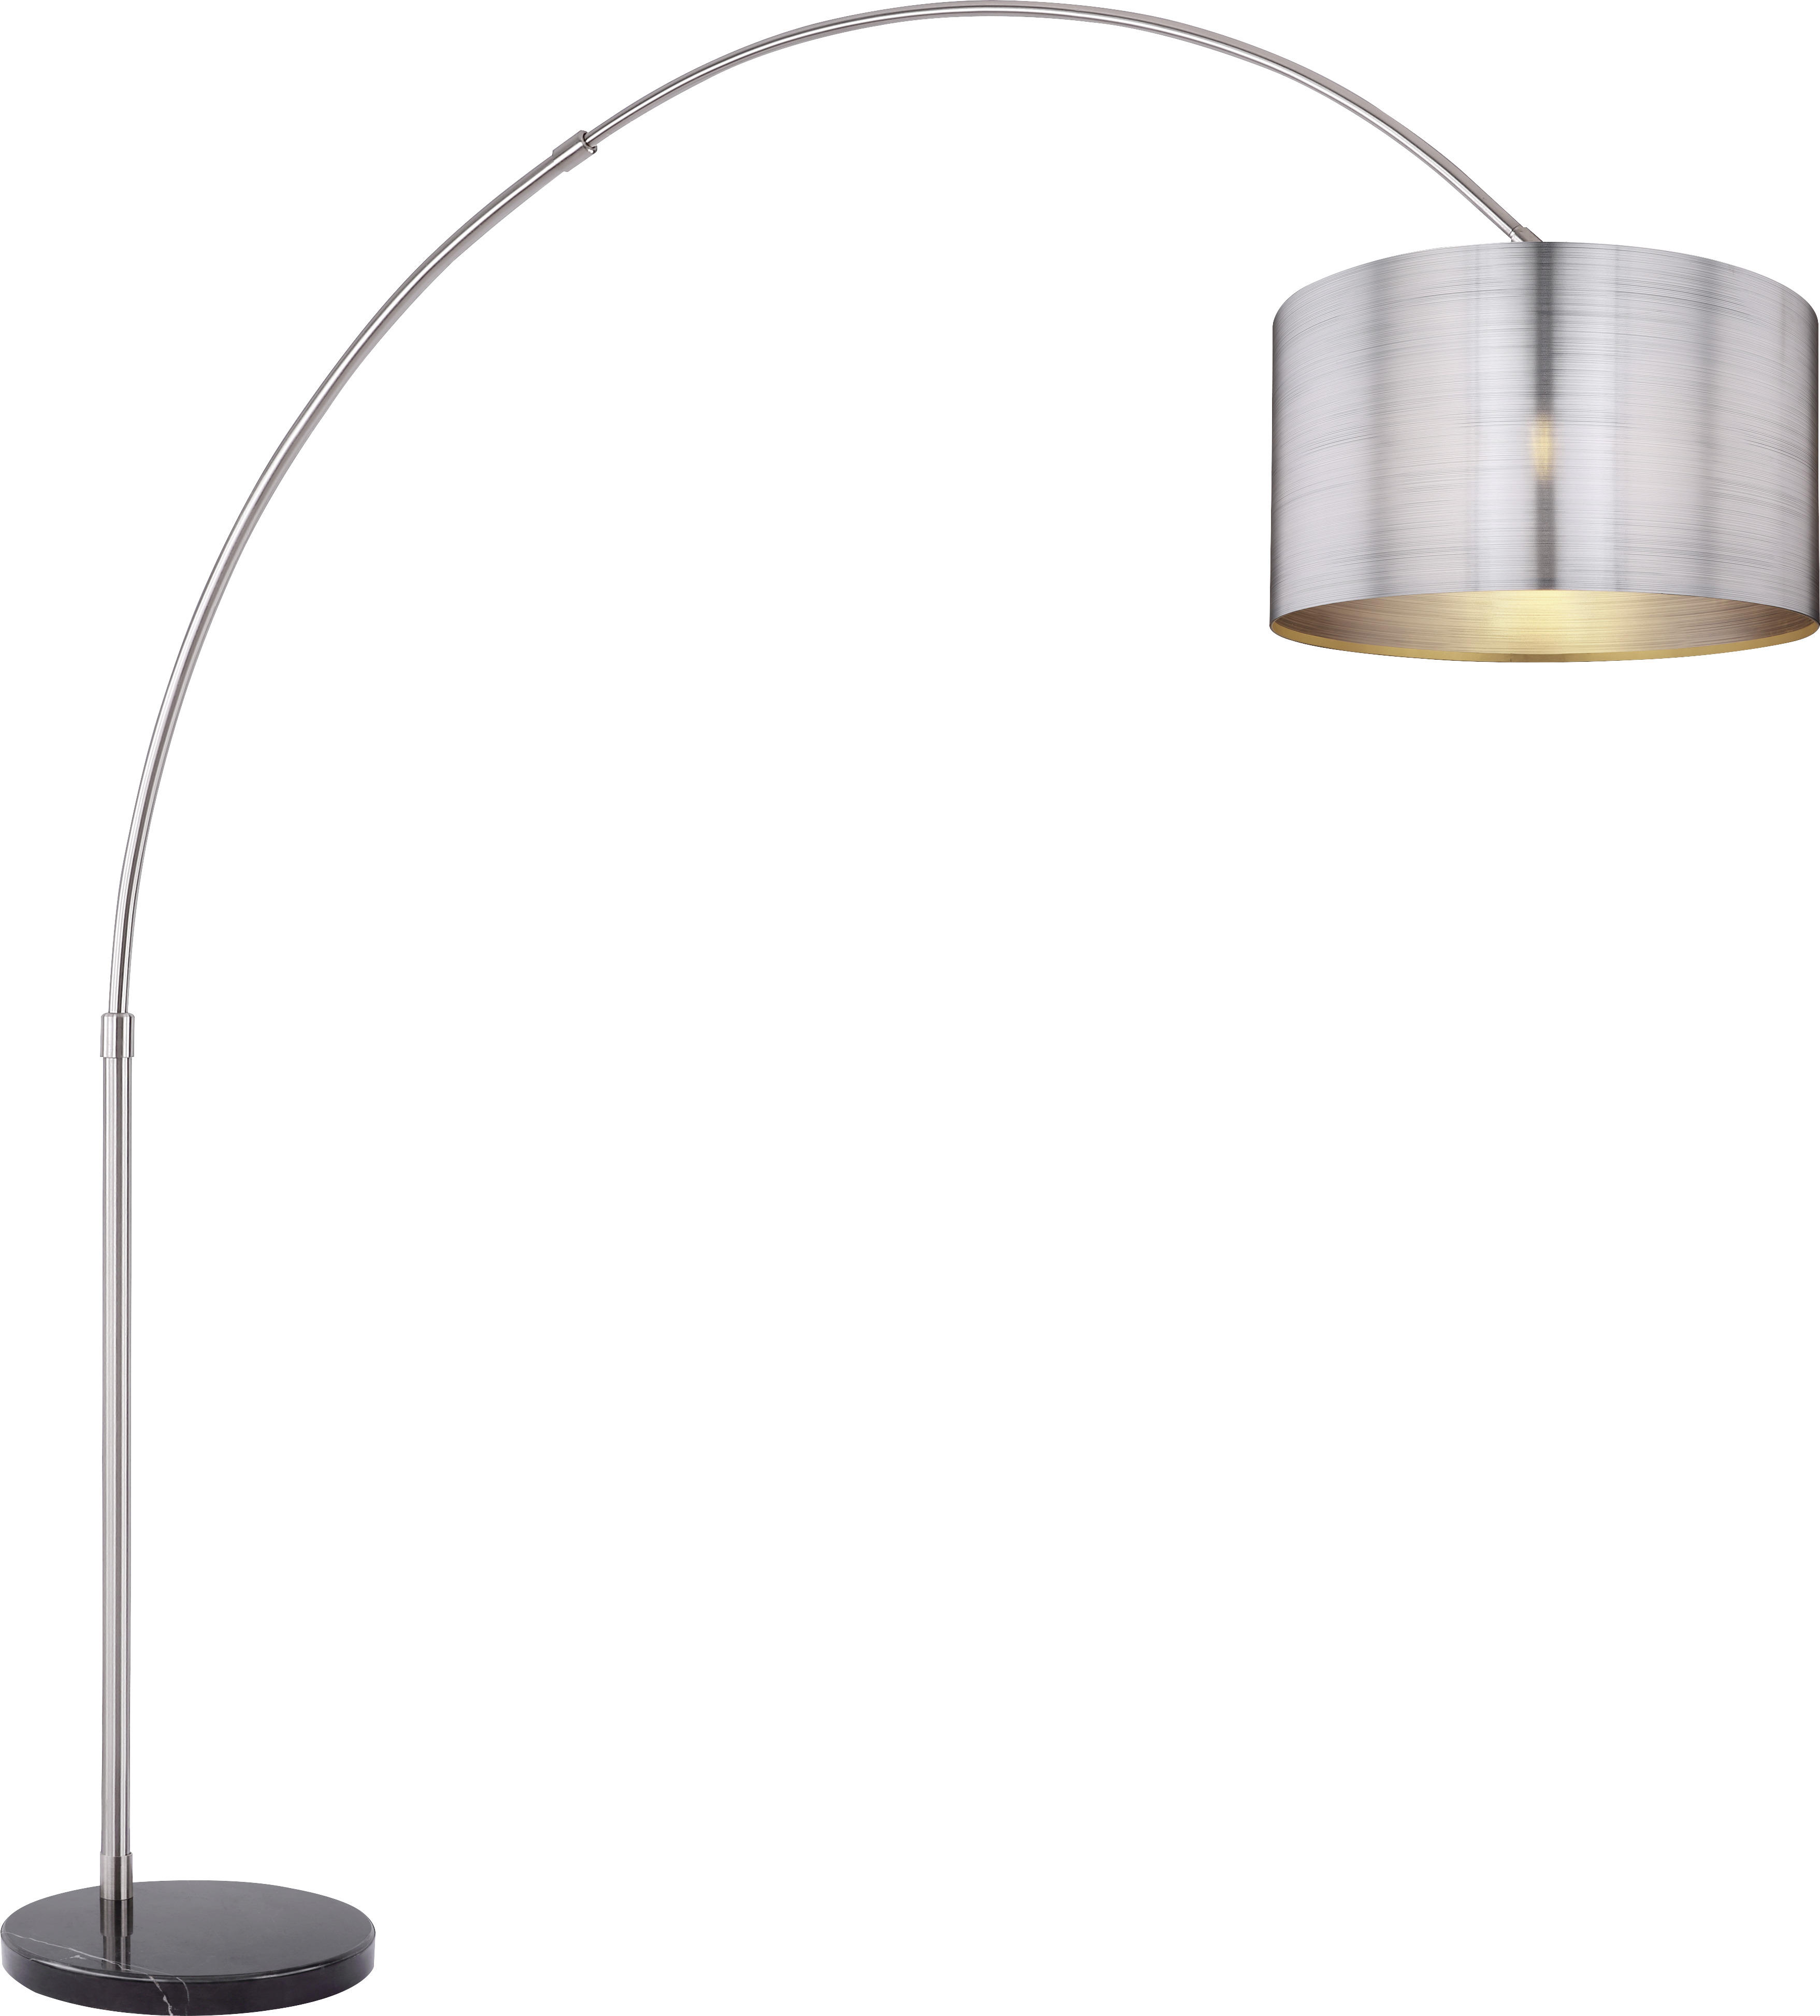 LAMPADAR CU PICIOR CURBAT - culoare nichel/argintiu, Basics, plastic/metal (205/45/215cm) - Xora